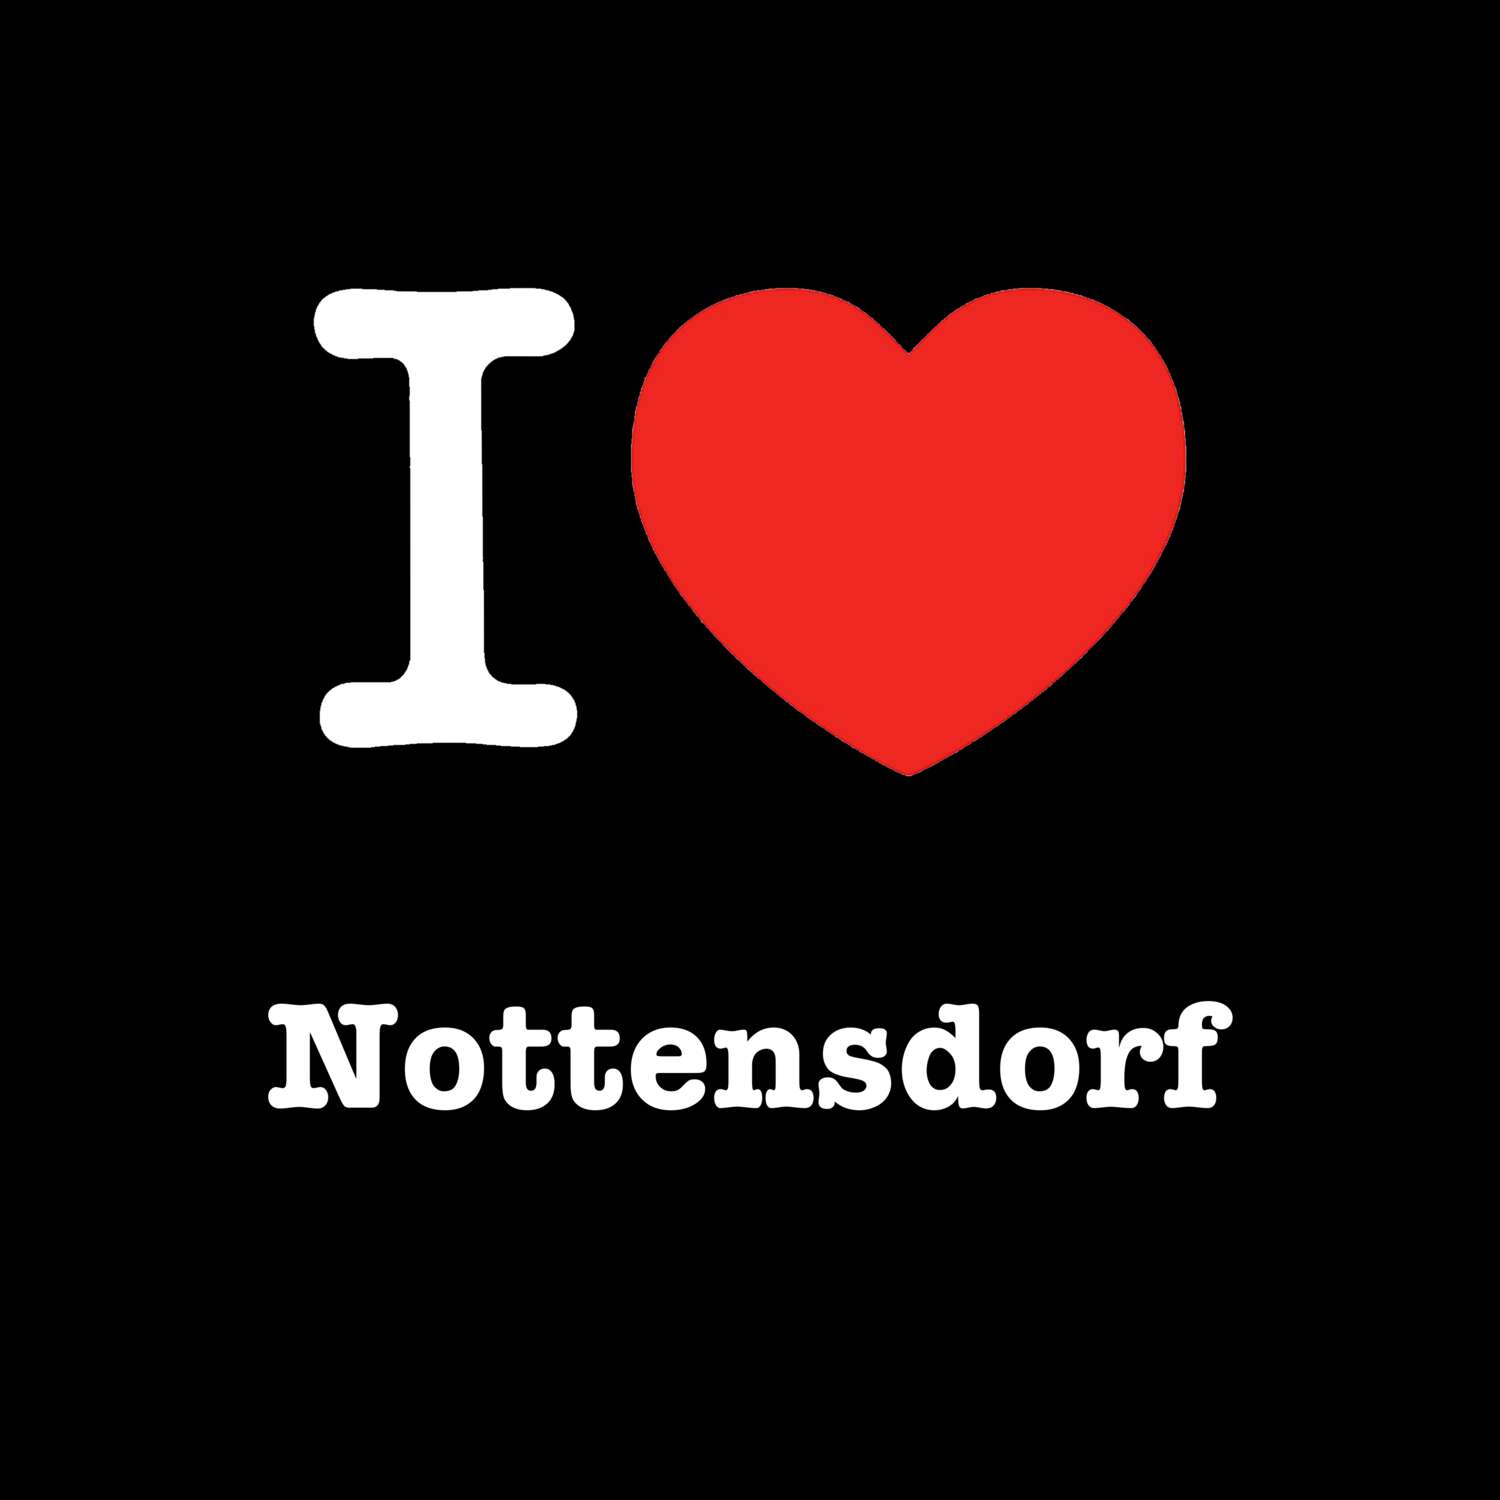 Nottensdorf T-Shirt »I love«